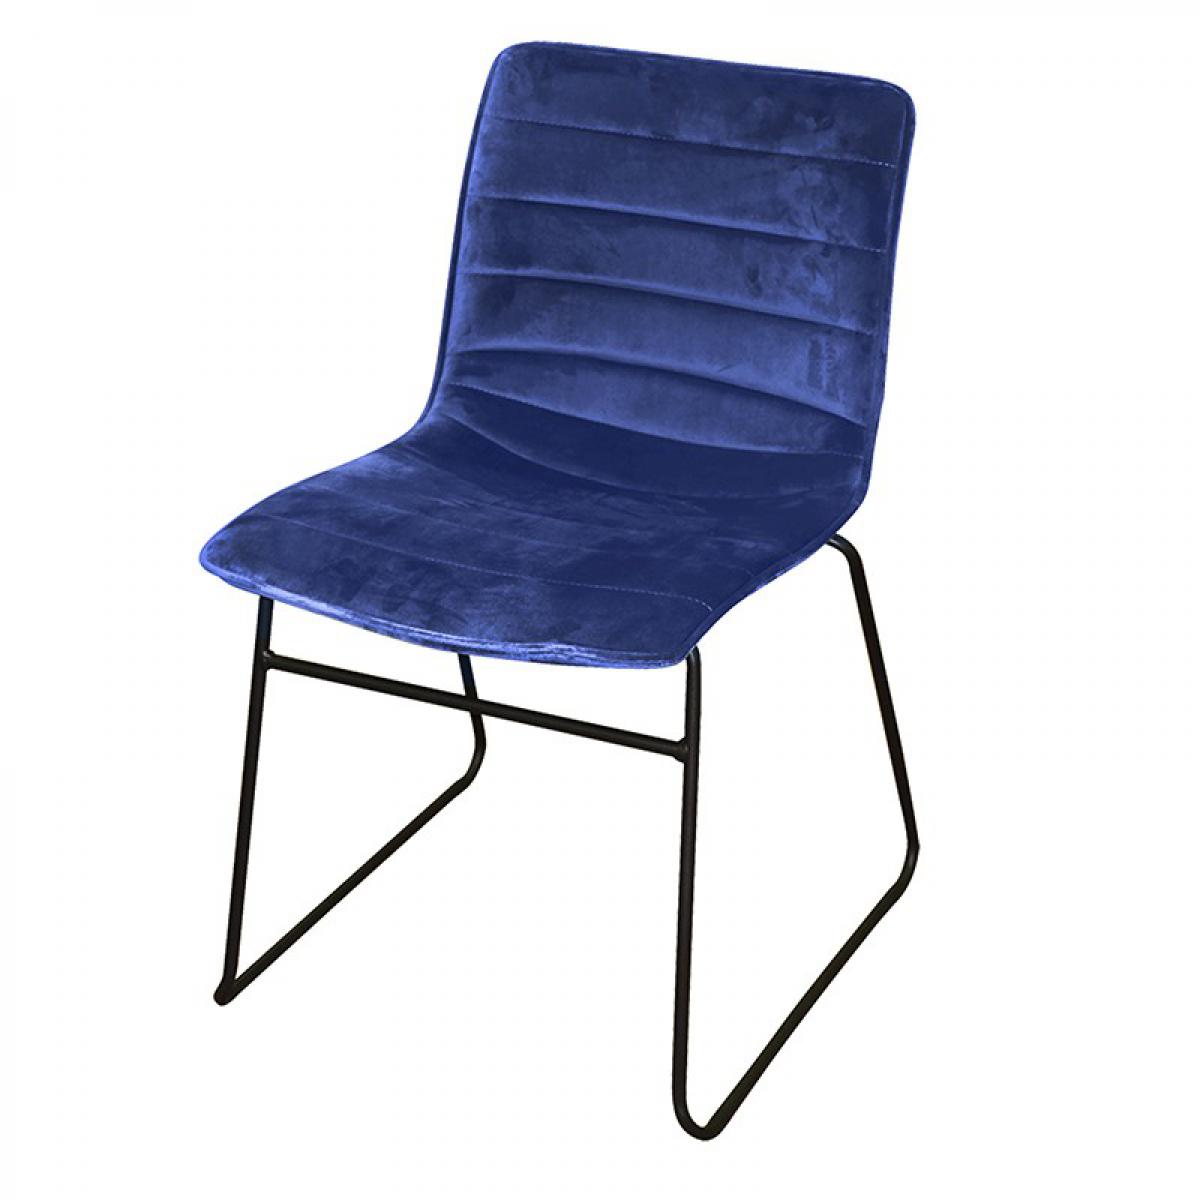 Urban Living - Chaise en velours côtelé bleu profond Brooklyn - Chaises